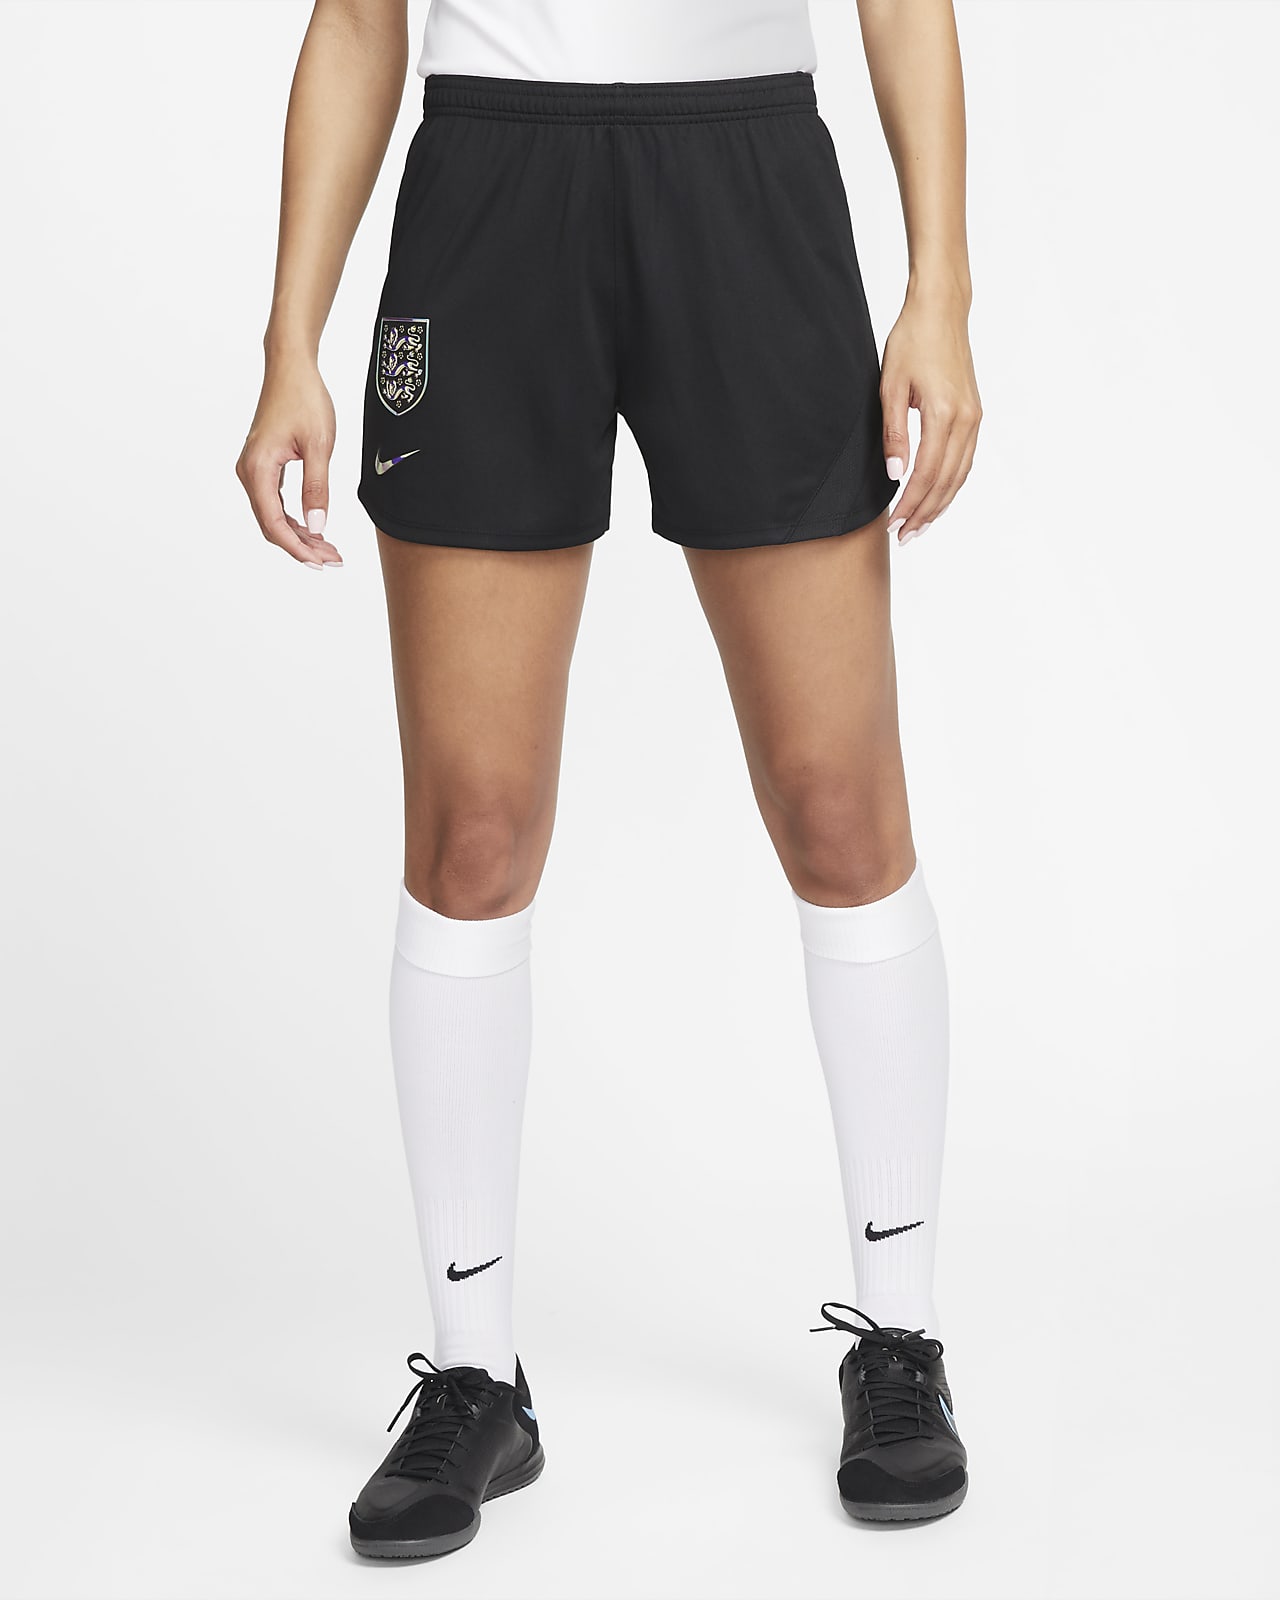 England Academy Pro Women's Nike Knit Football Shorts